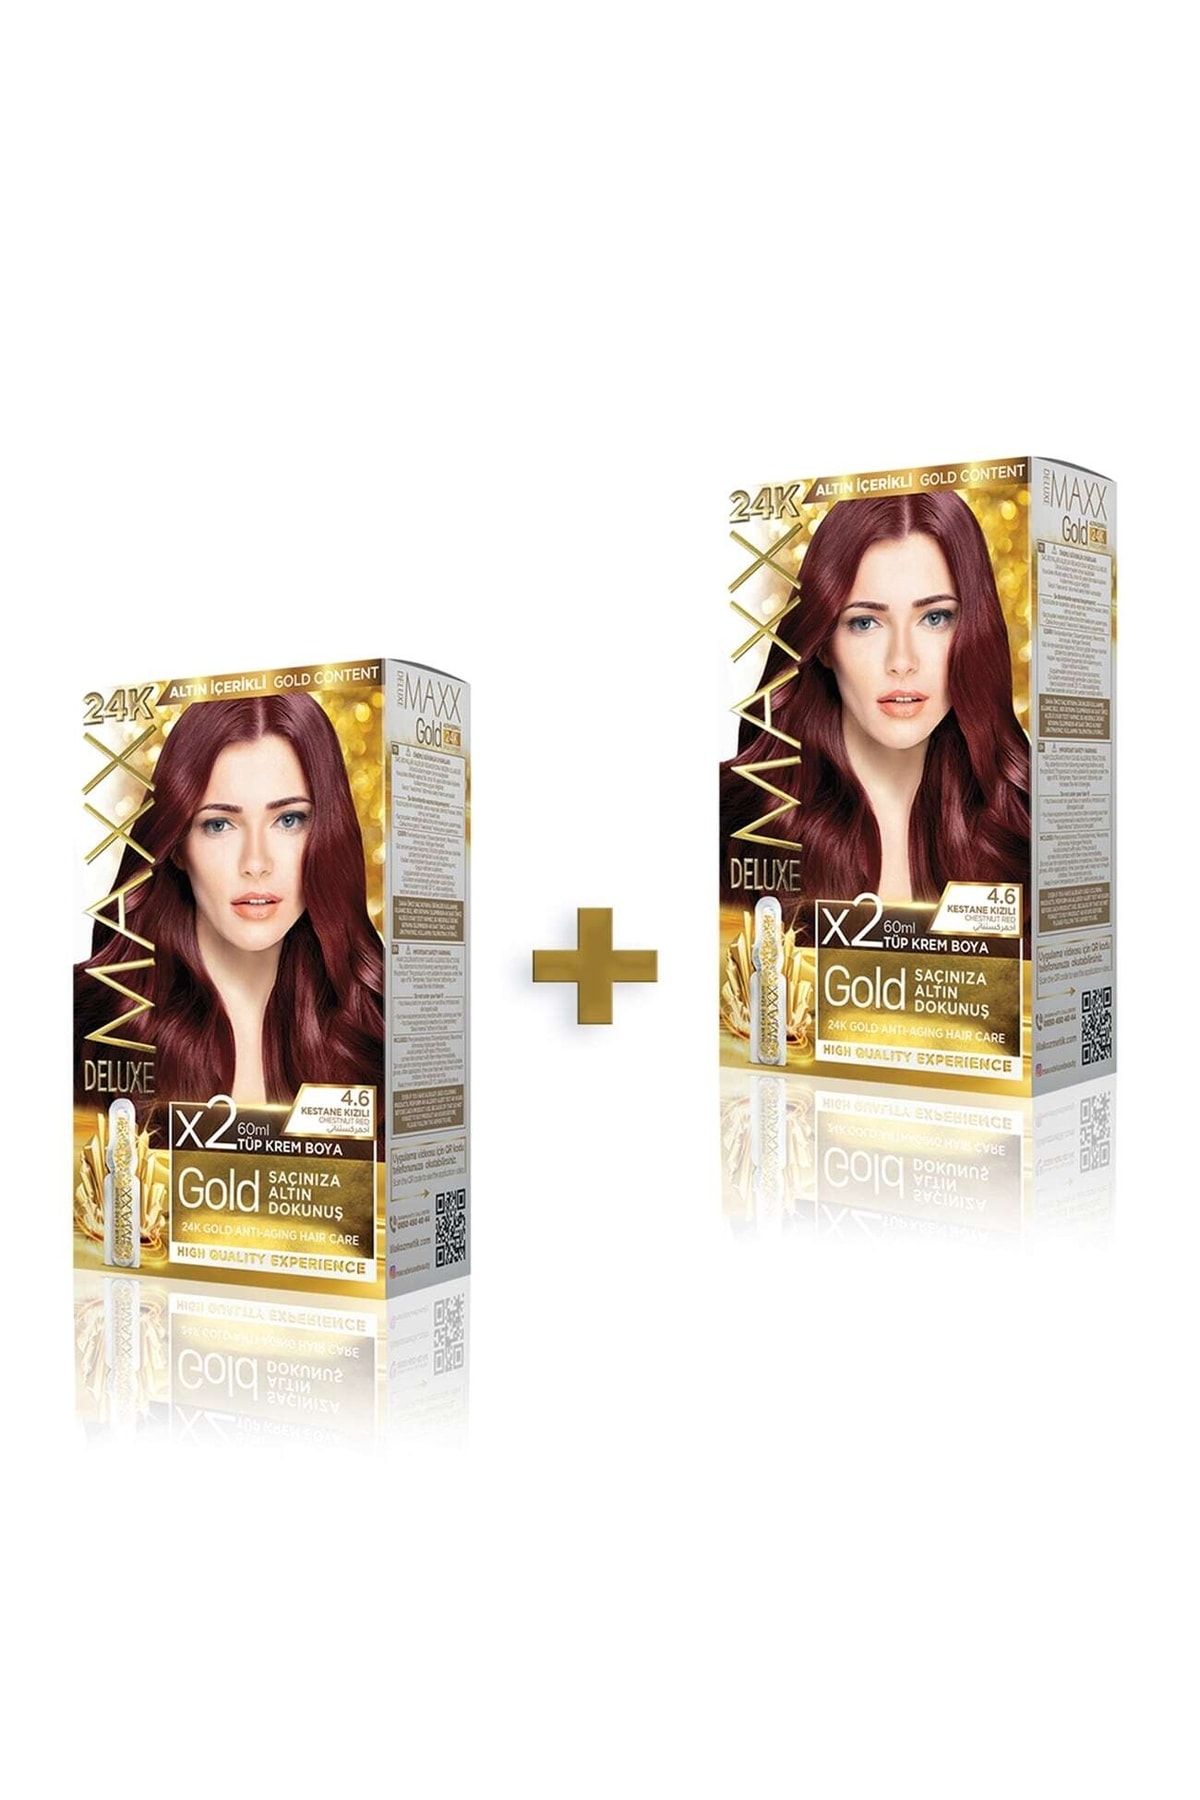 MAXX DELUXE Golden Beauty 24k 4.6 Kestane Kızılı Boya Seti 2 Adet